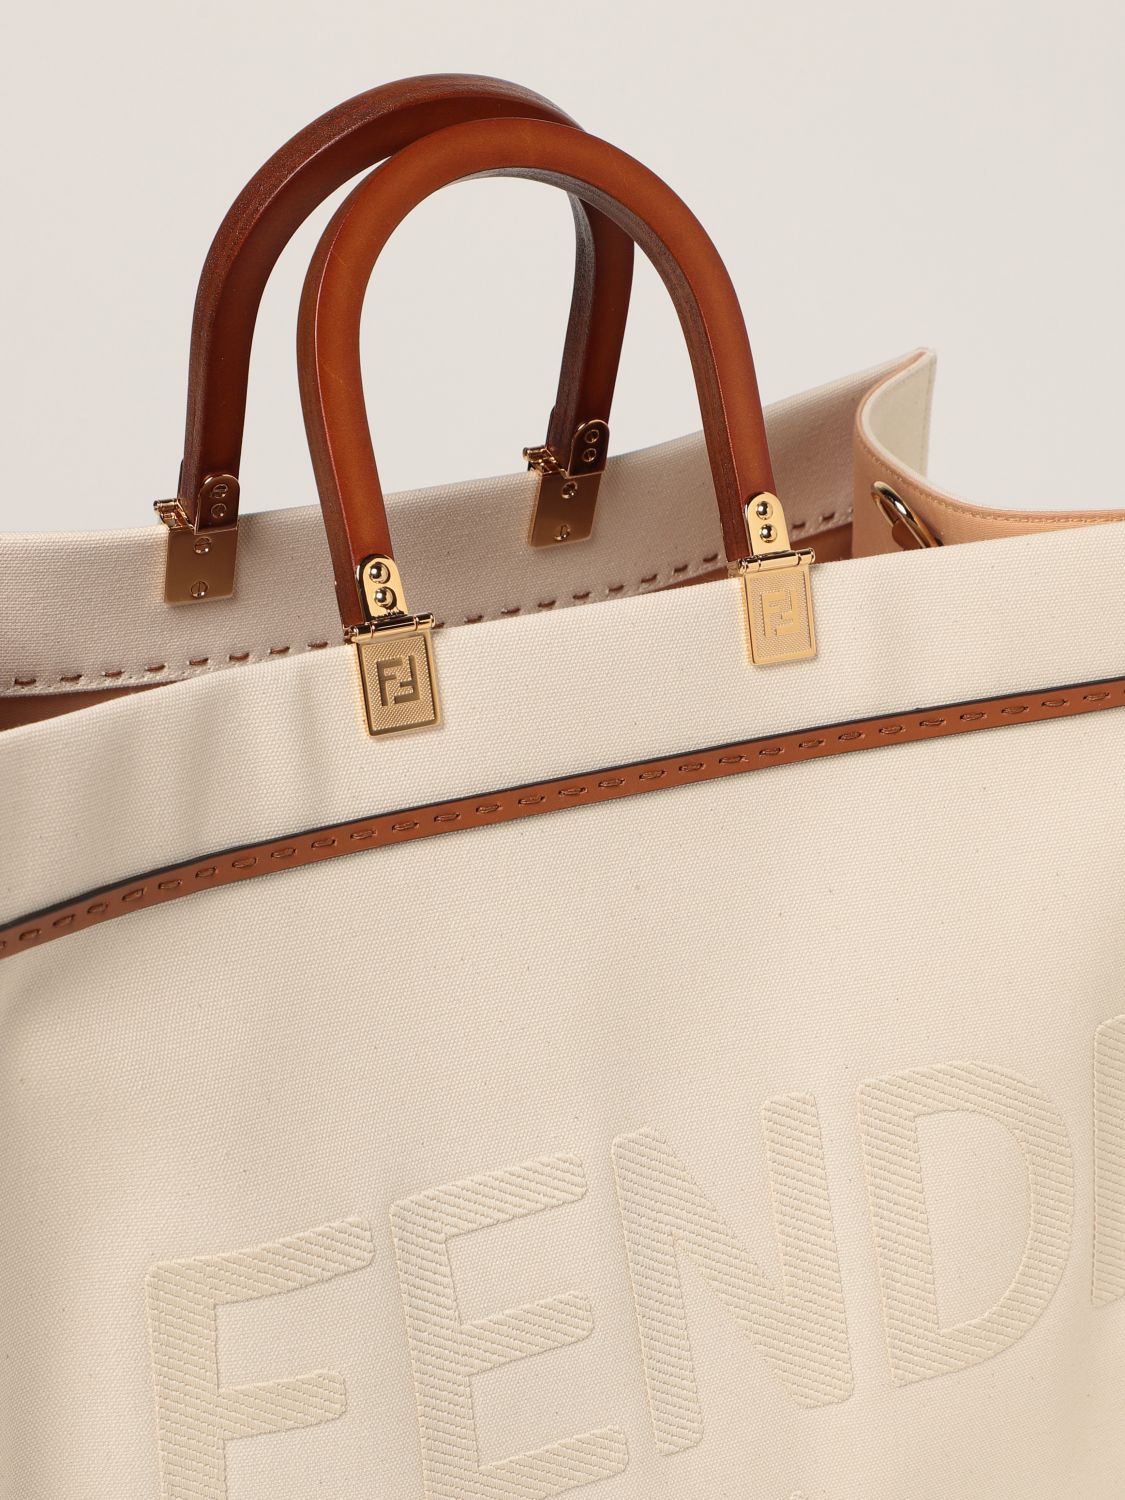 FENDI: Sunshine bag in canvas with big Roma logo | Tote Bags Fendi ...